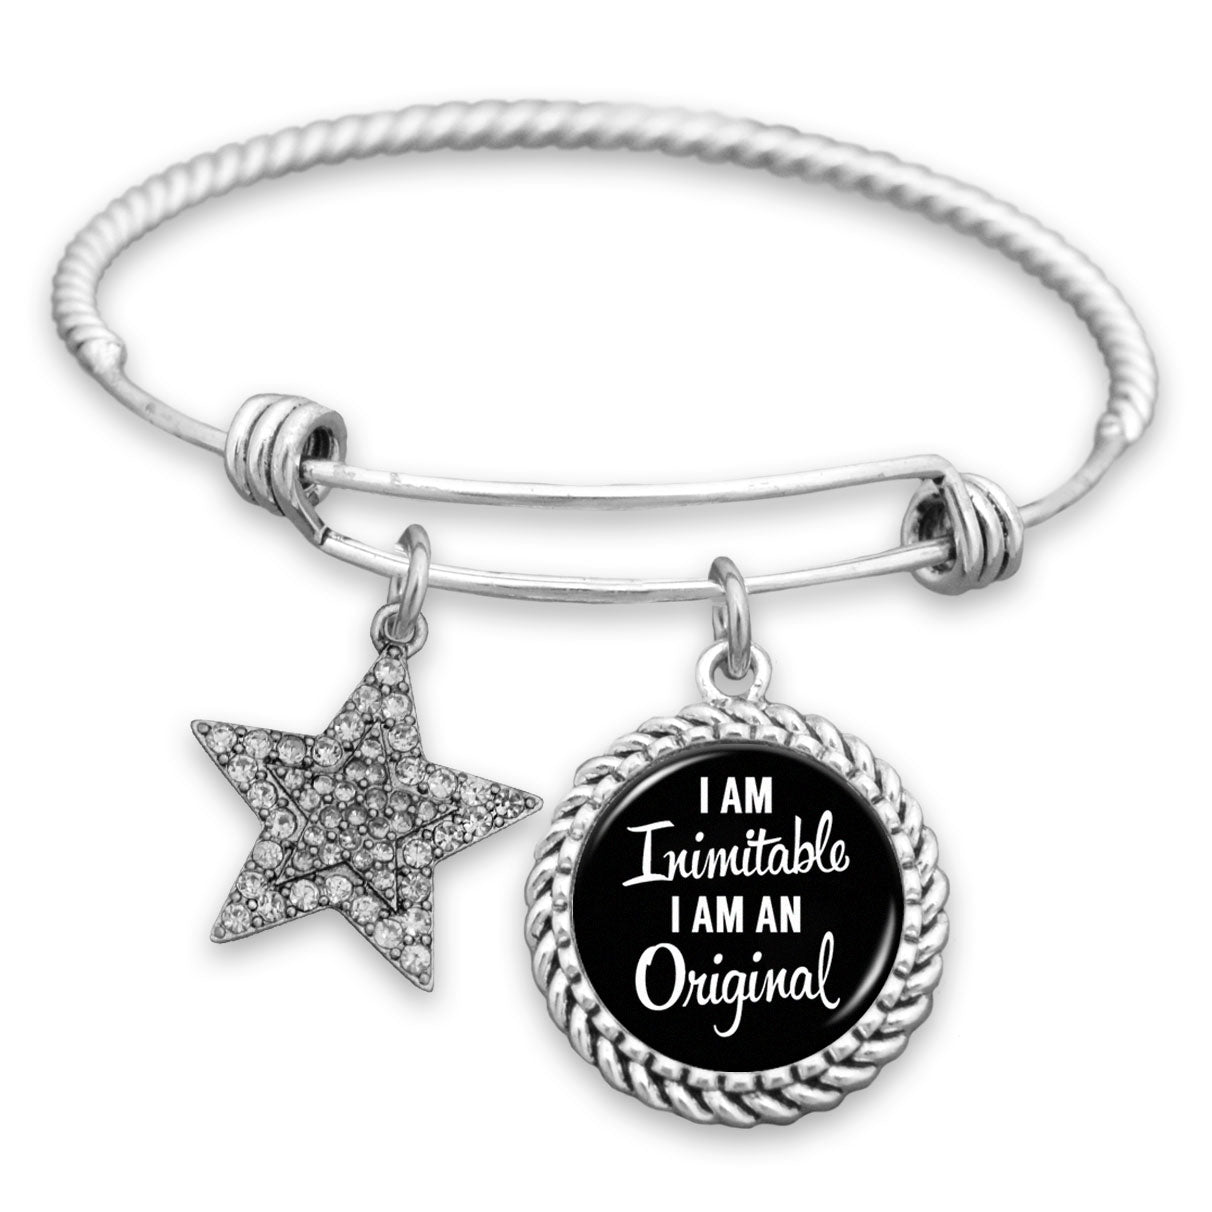 I Am Inimitable, I Am An Original Charm Bracelet